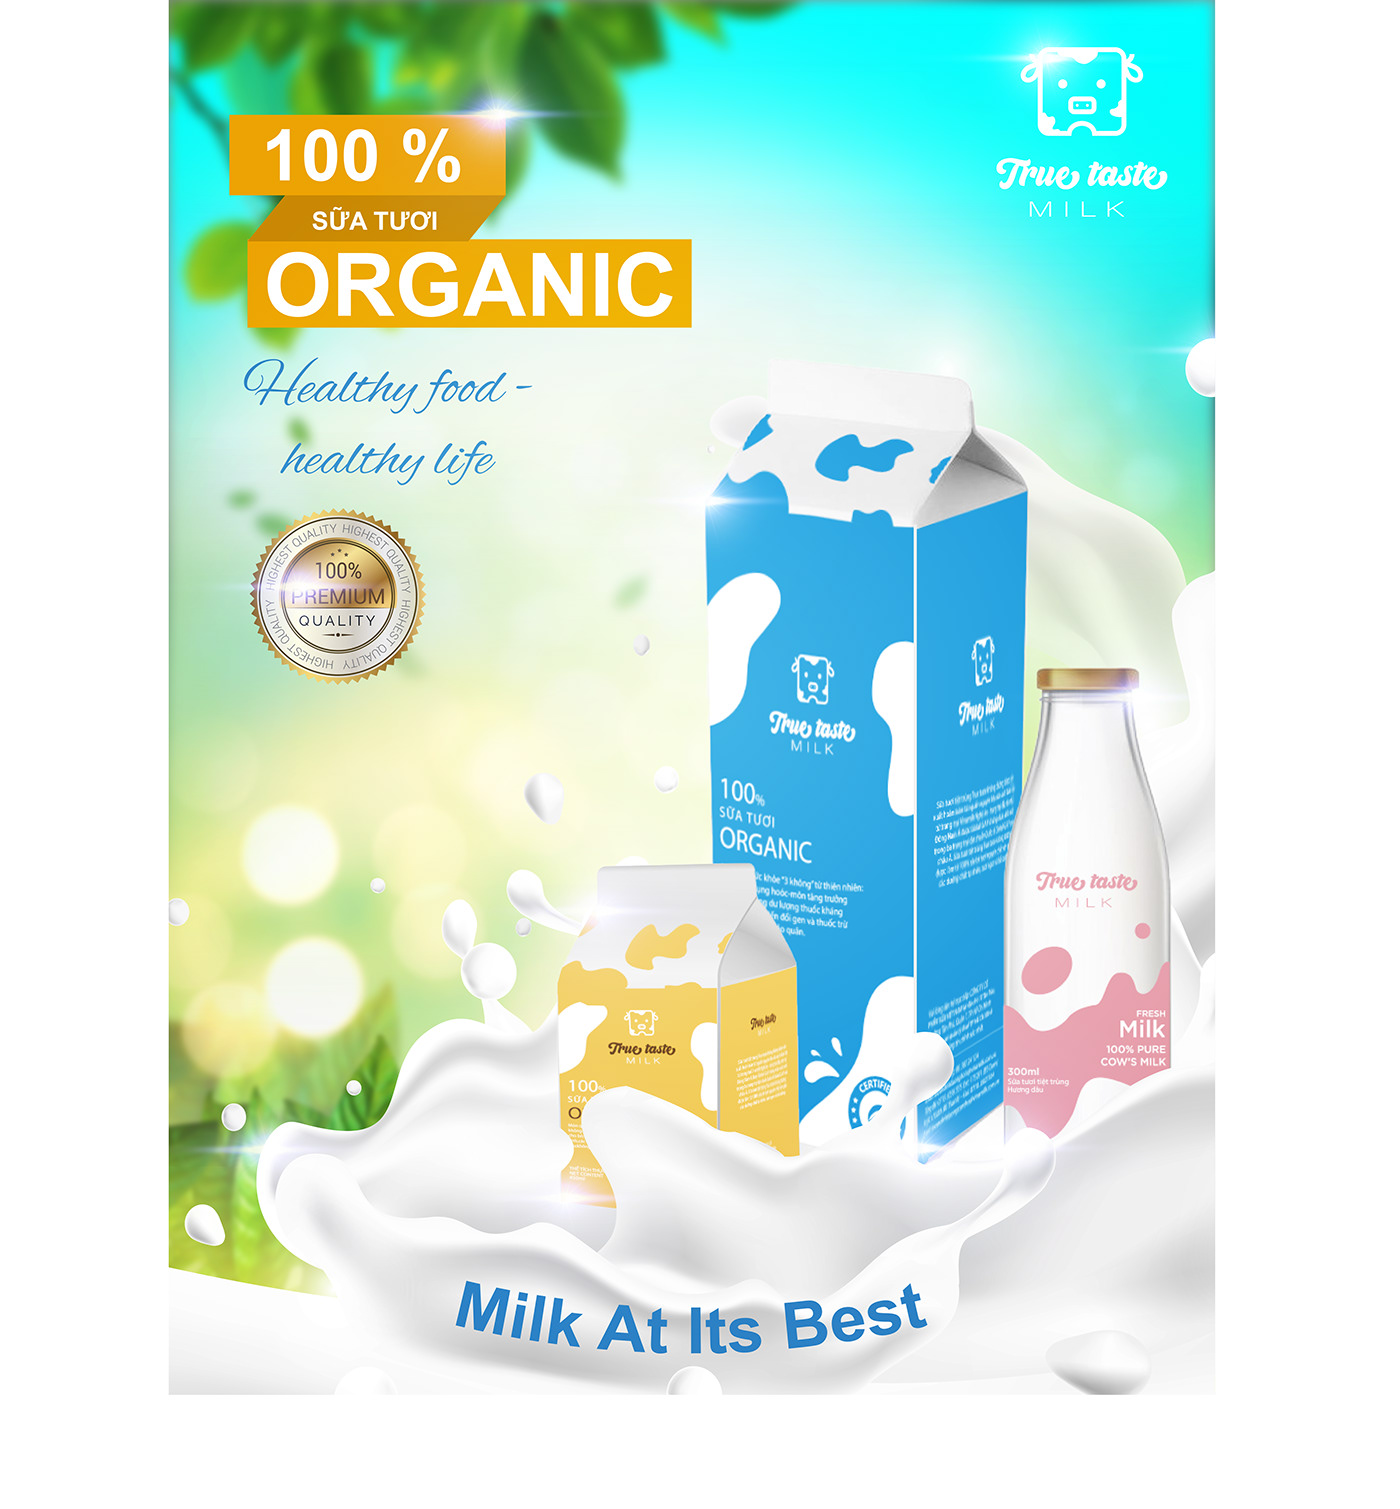 #milk